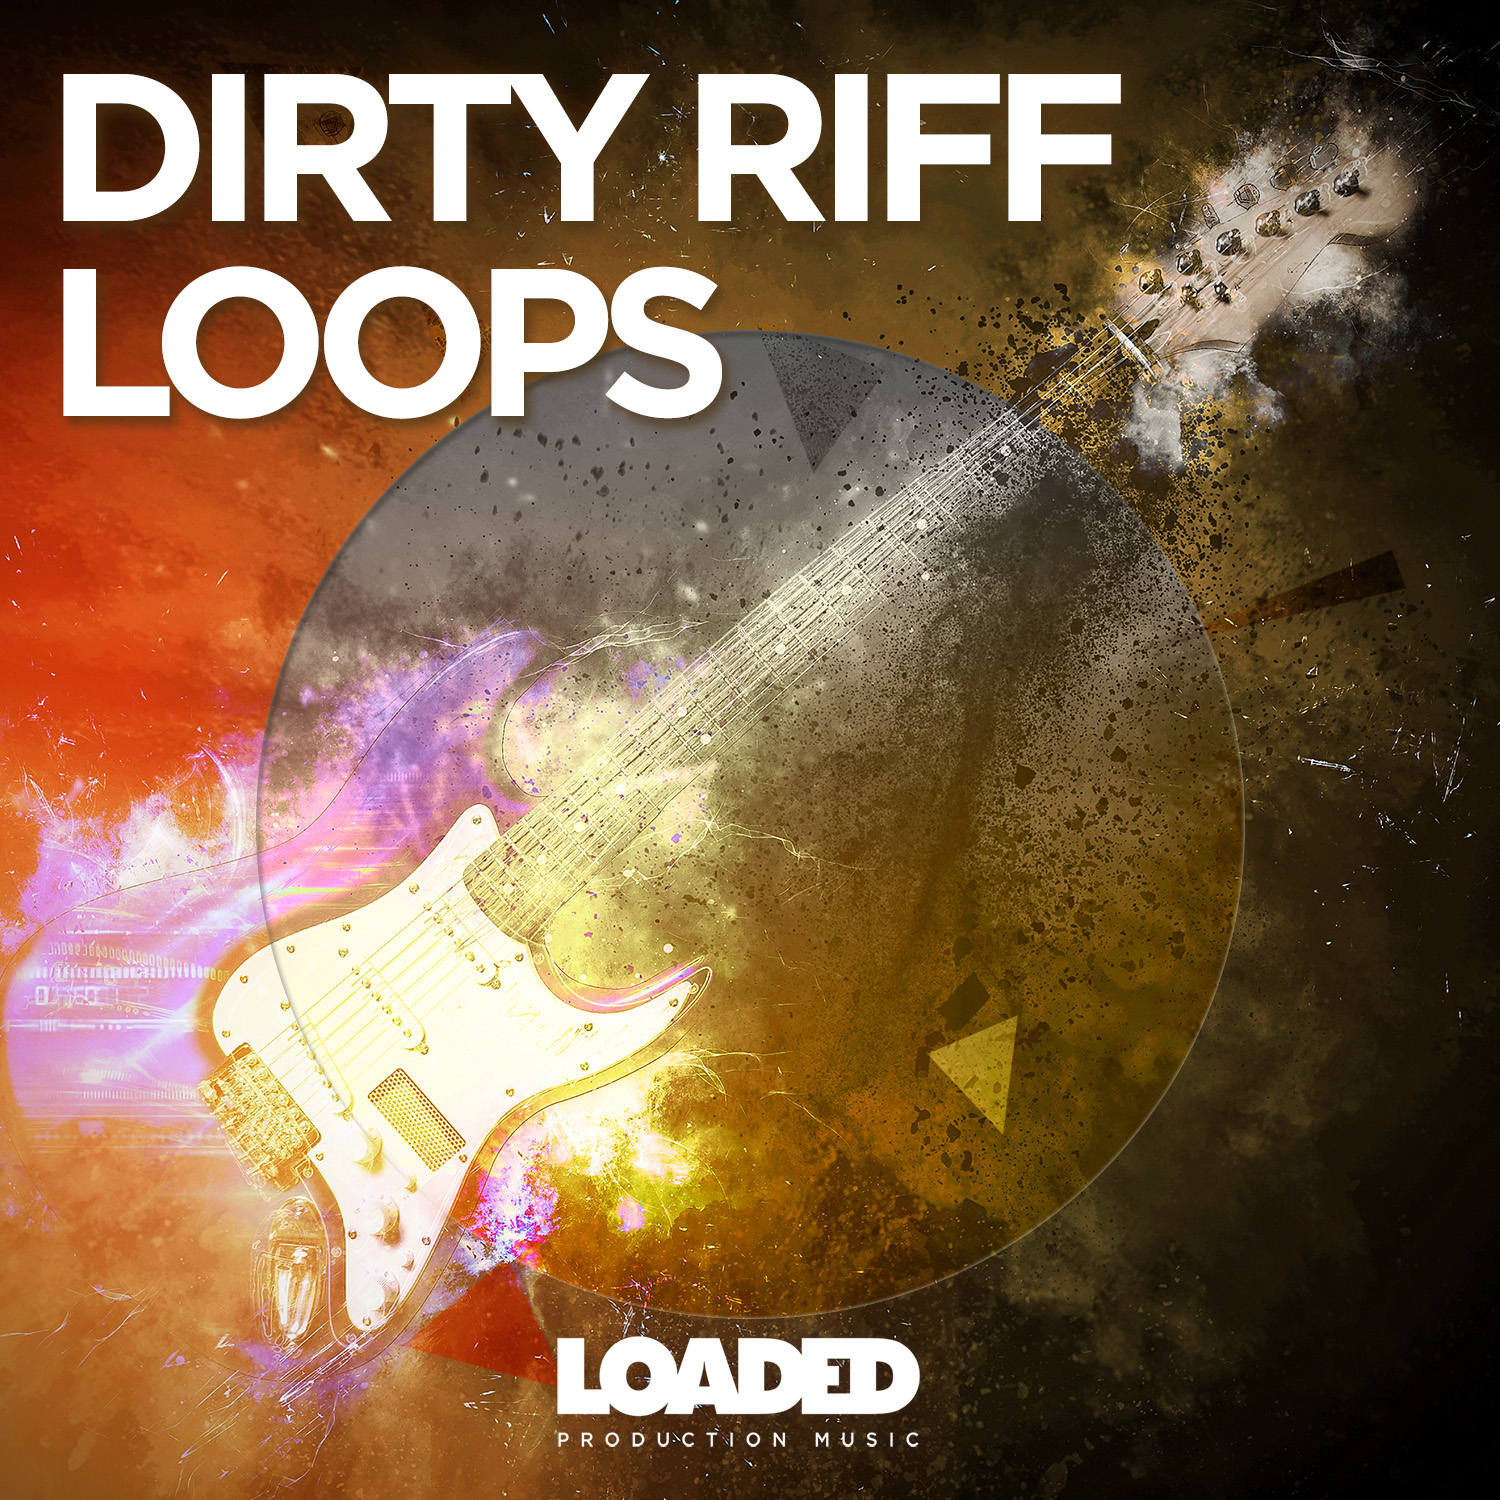 LPM 097 - Dirty Riff Loops - Album Cover